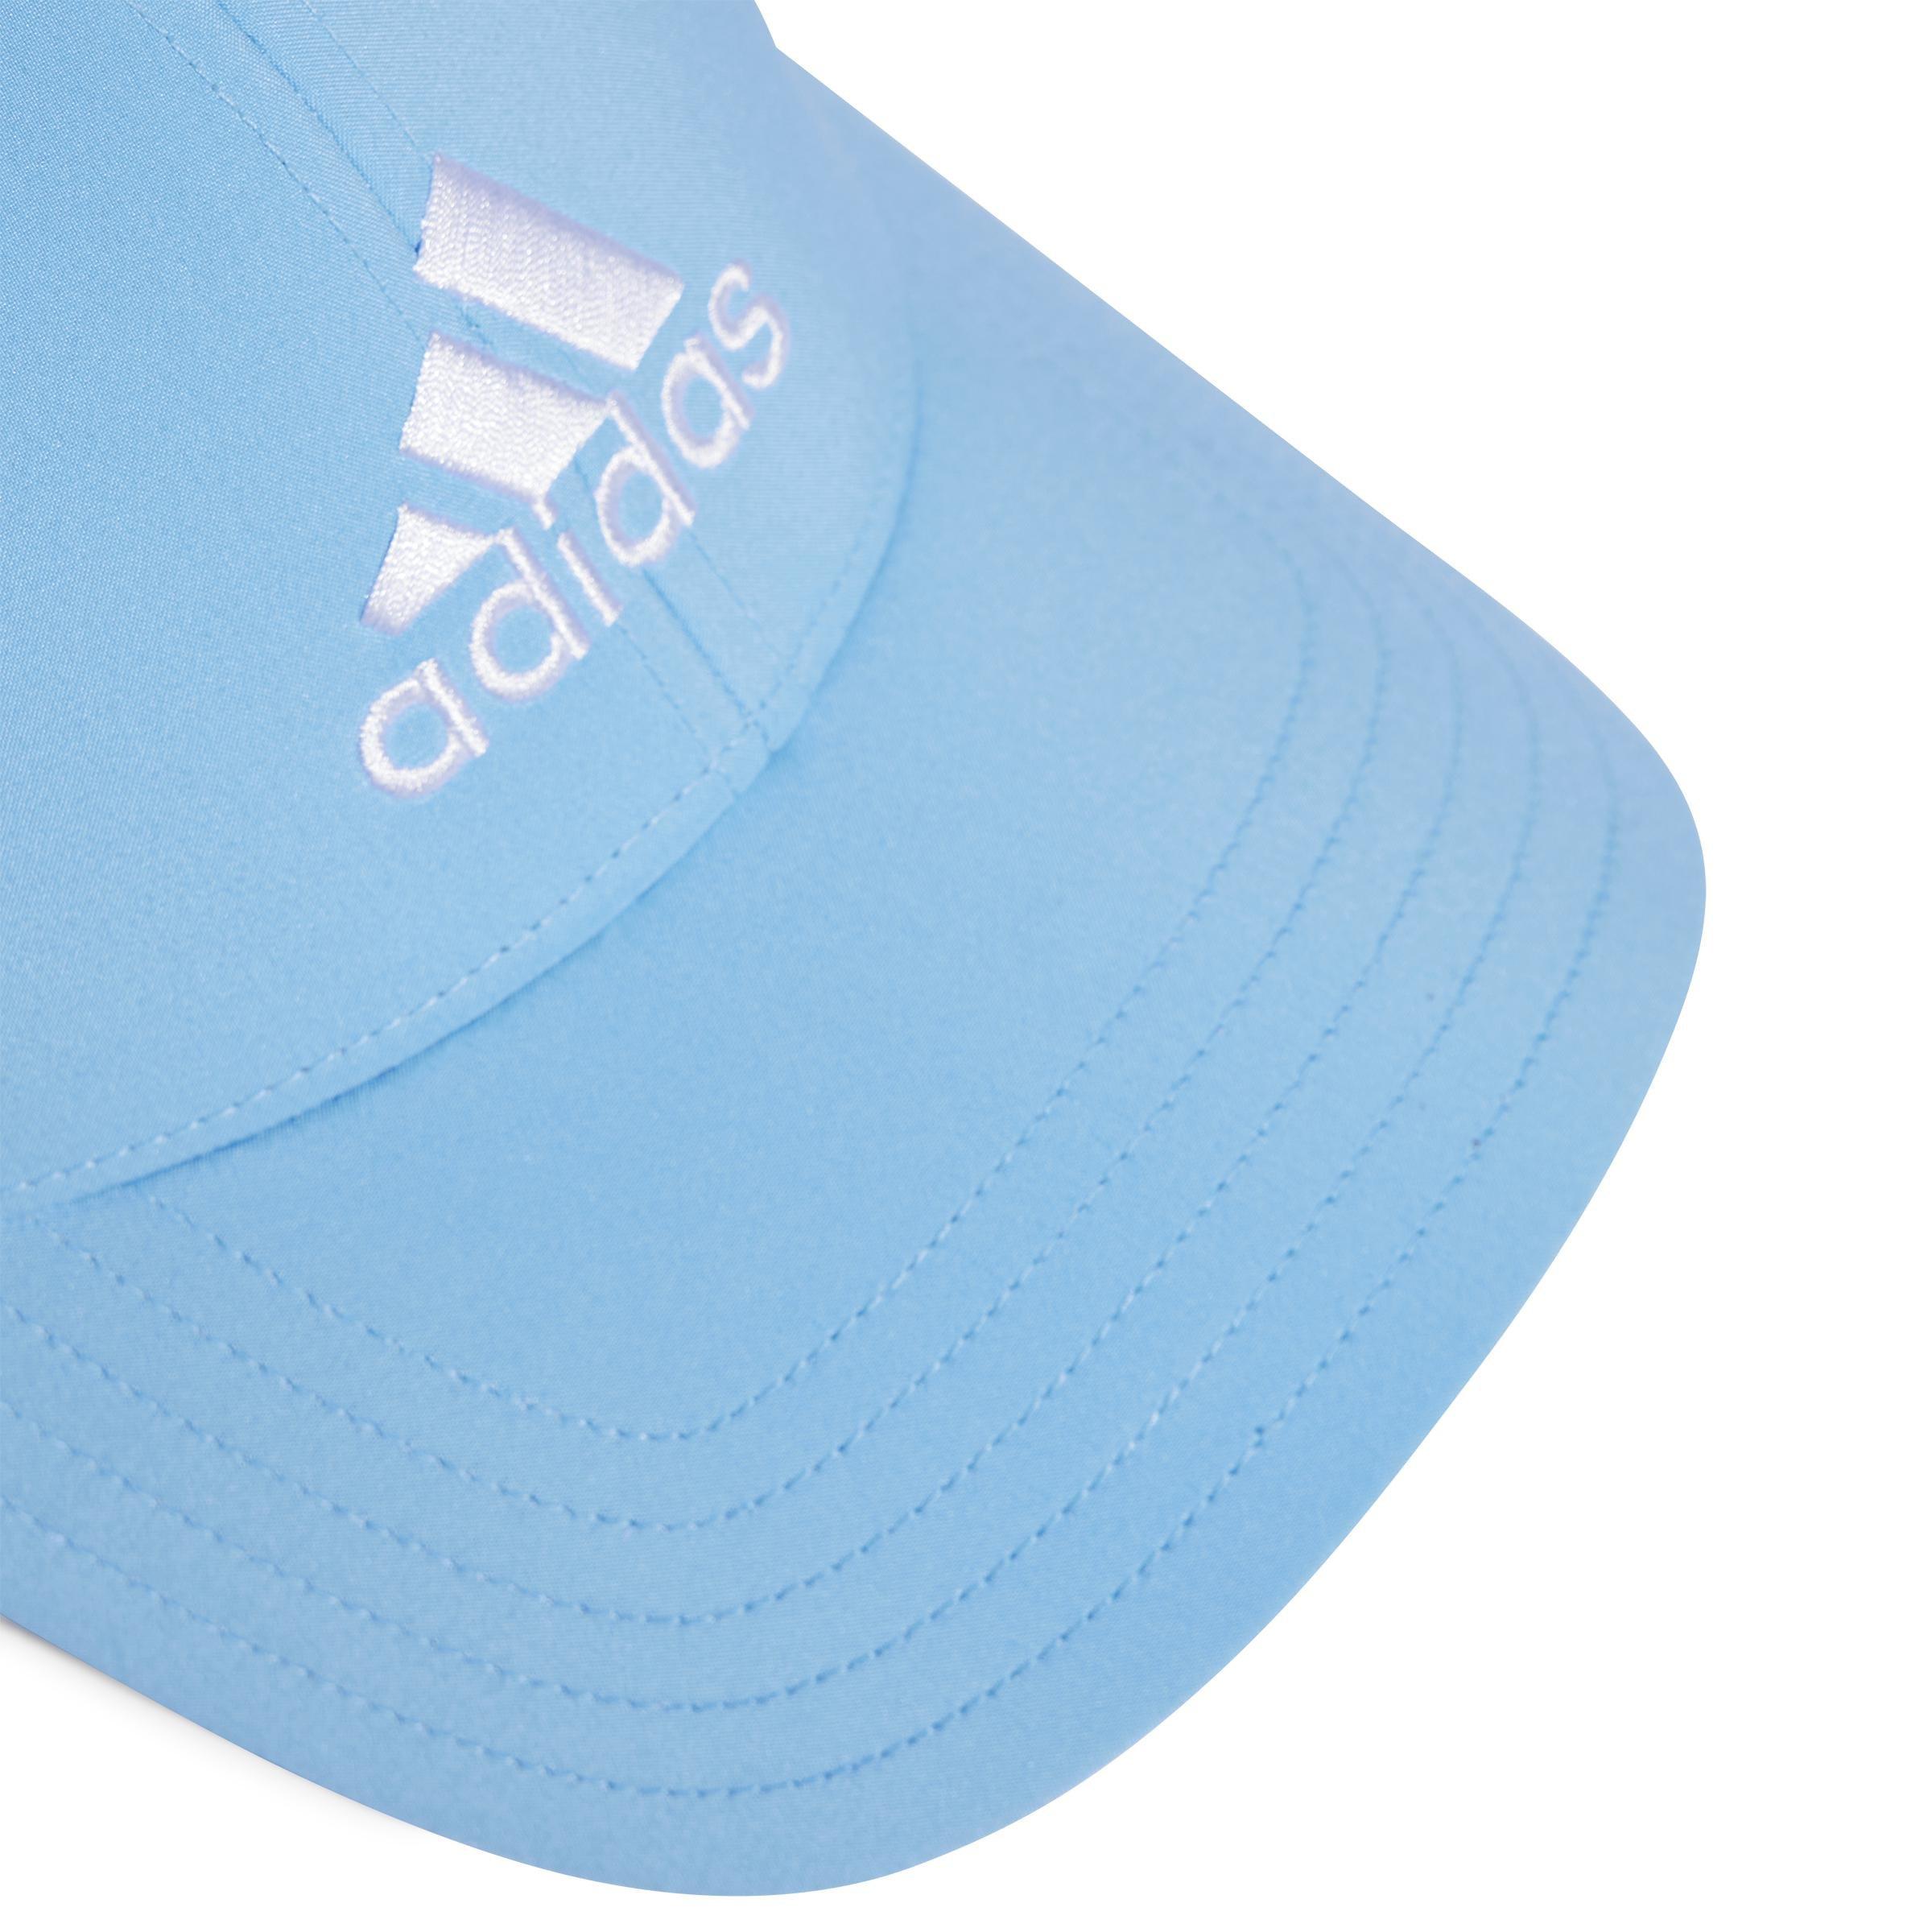 adidas - Unisex Embroidered Logo Lightweight Baseball Cap, Blue